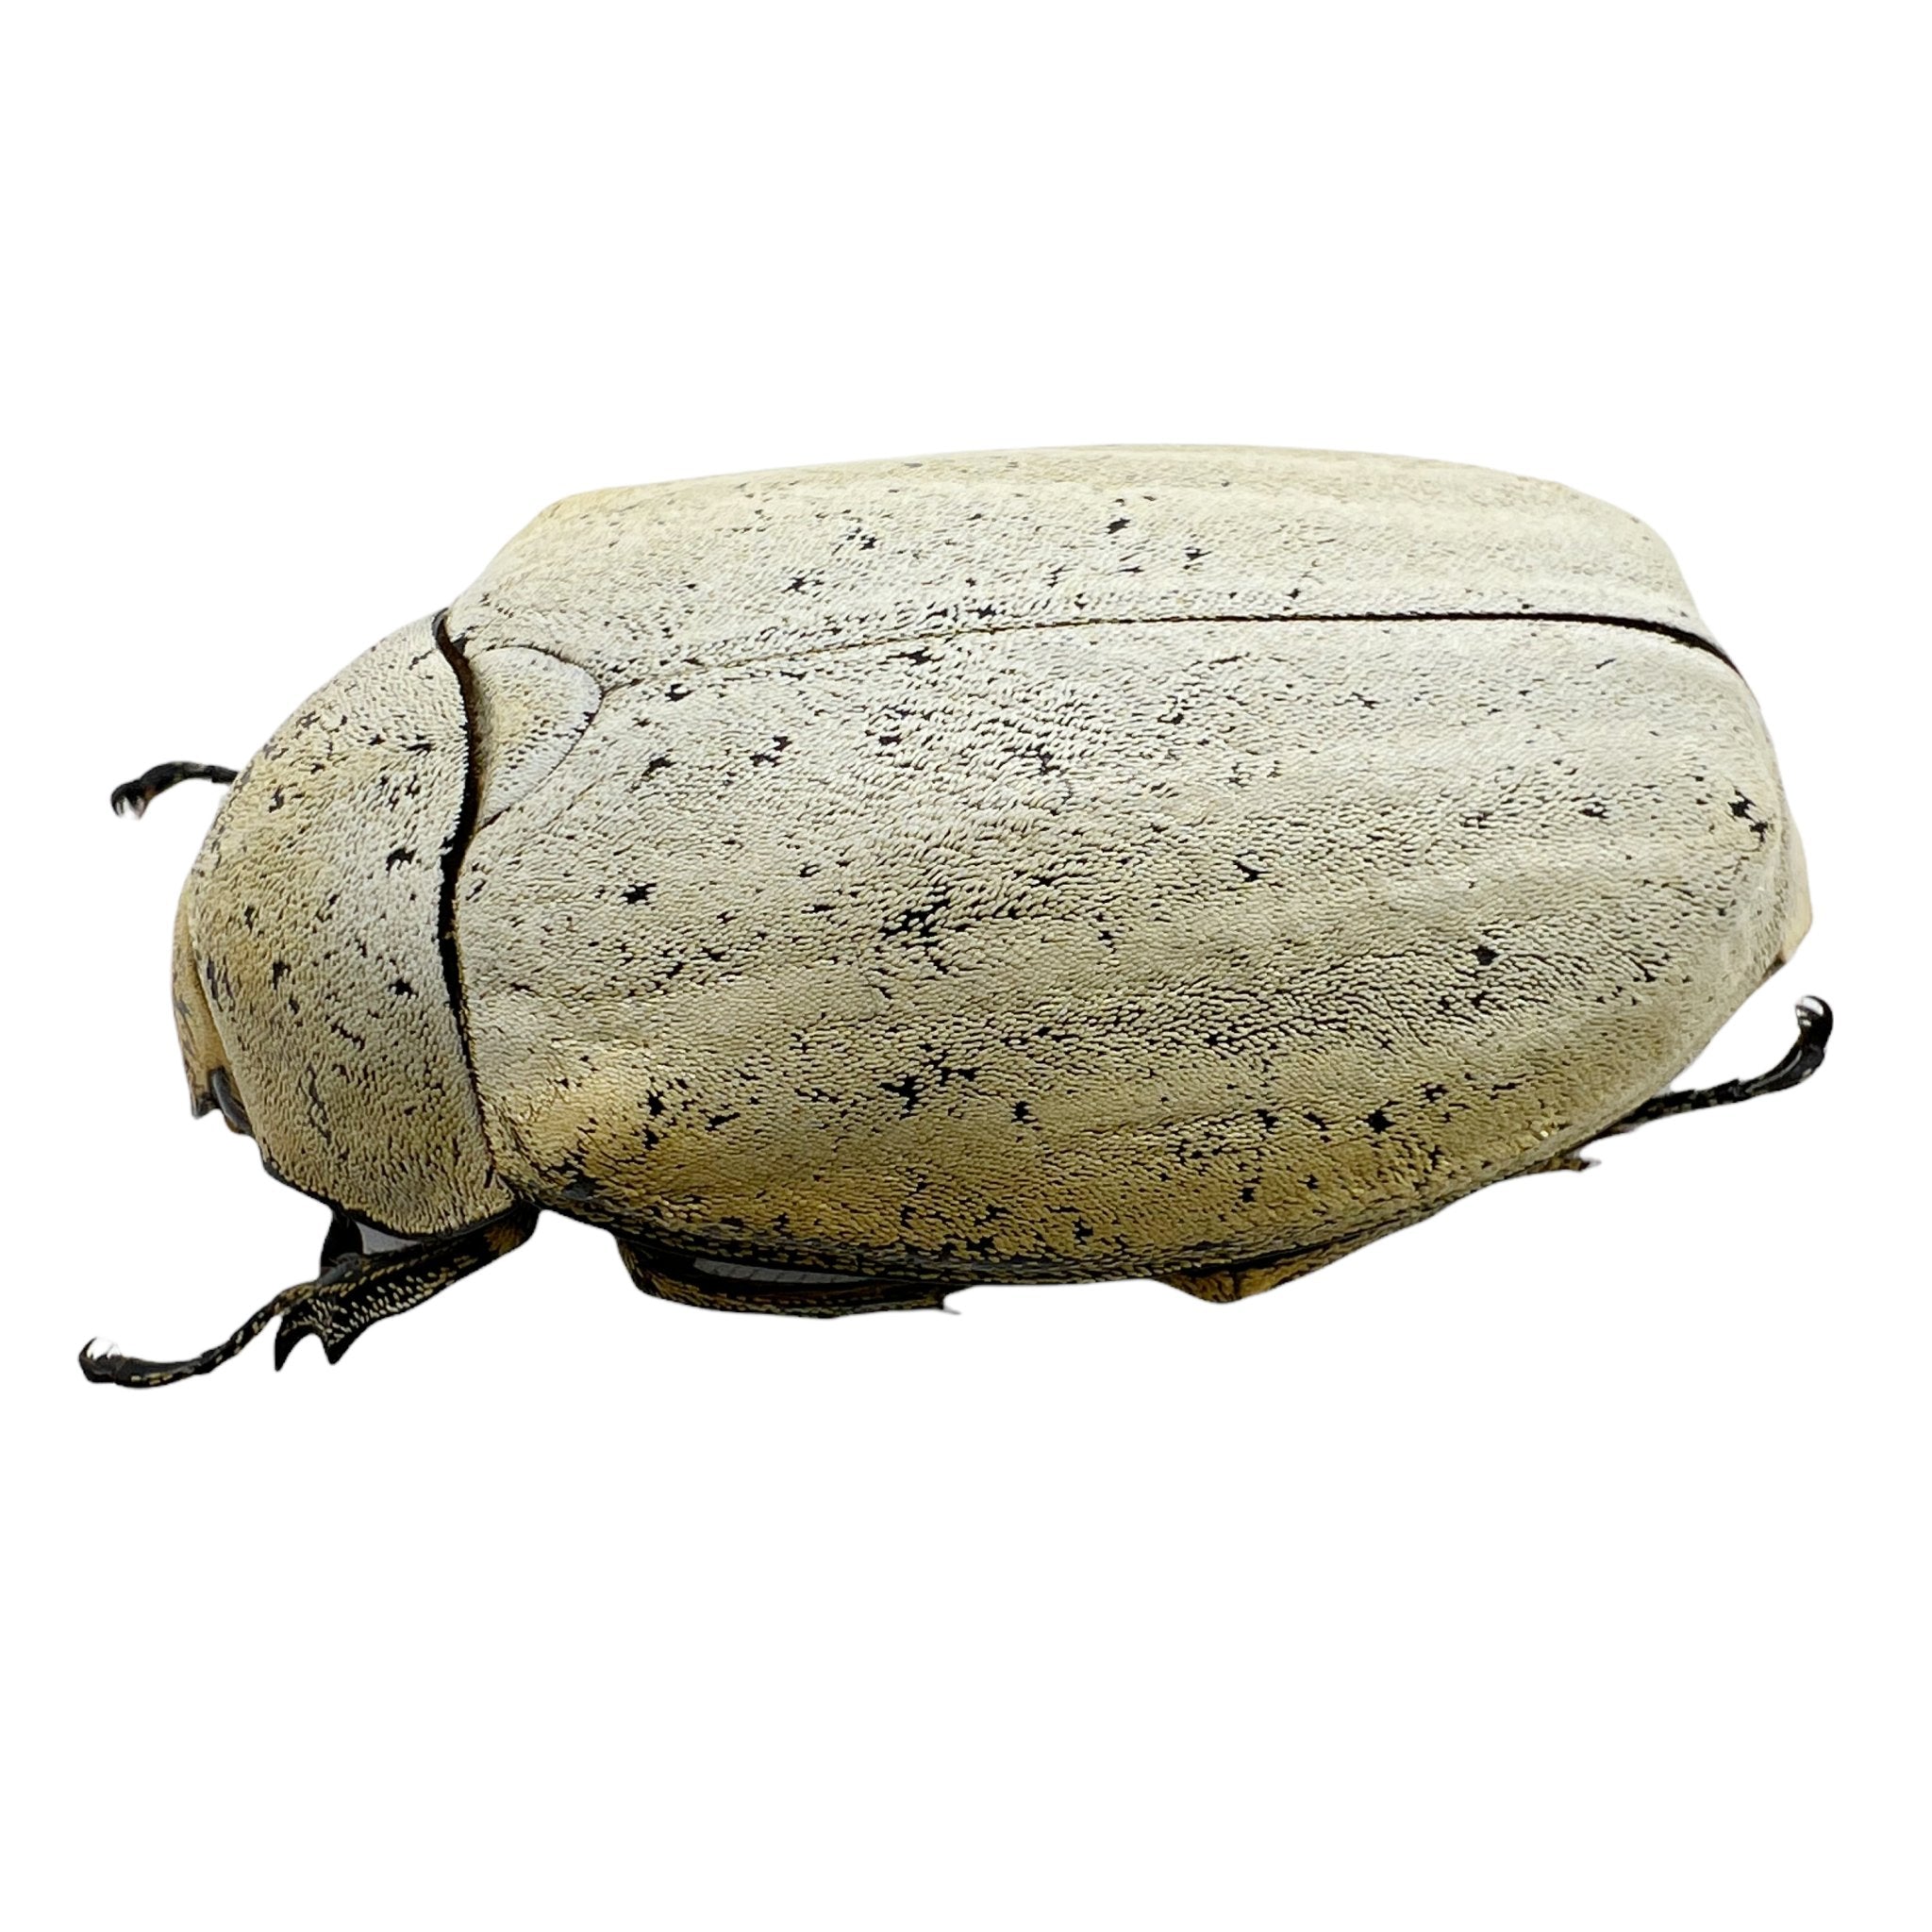 Sugarcane White Grub (Lepidiota stigma) Entomology – TaxidermyArtistry